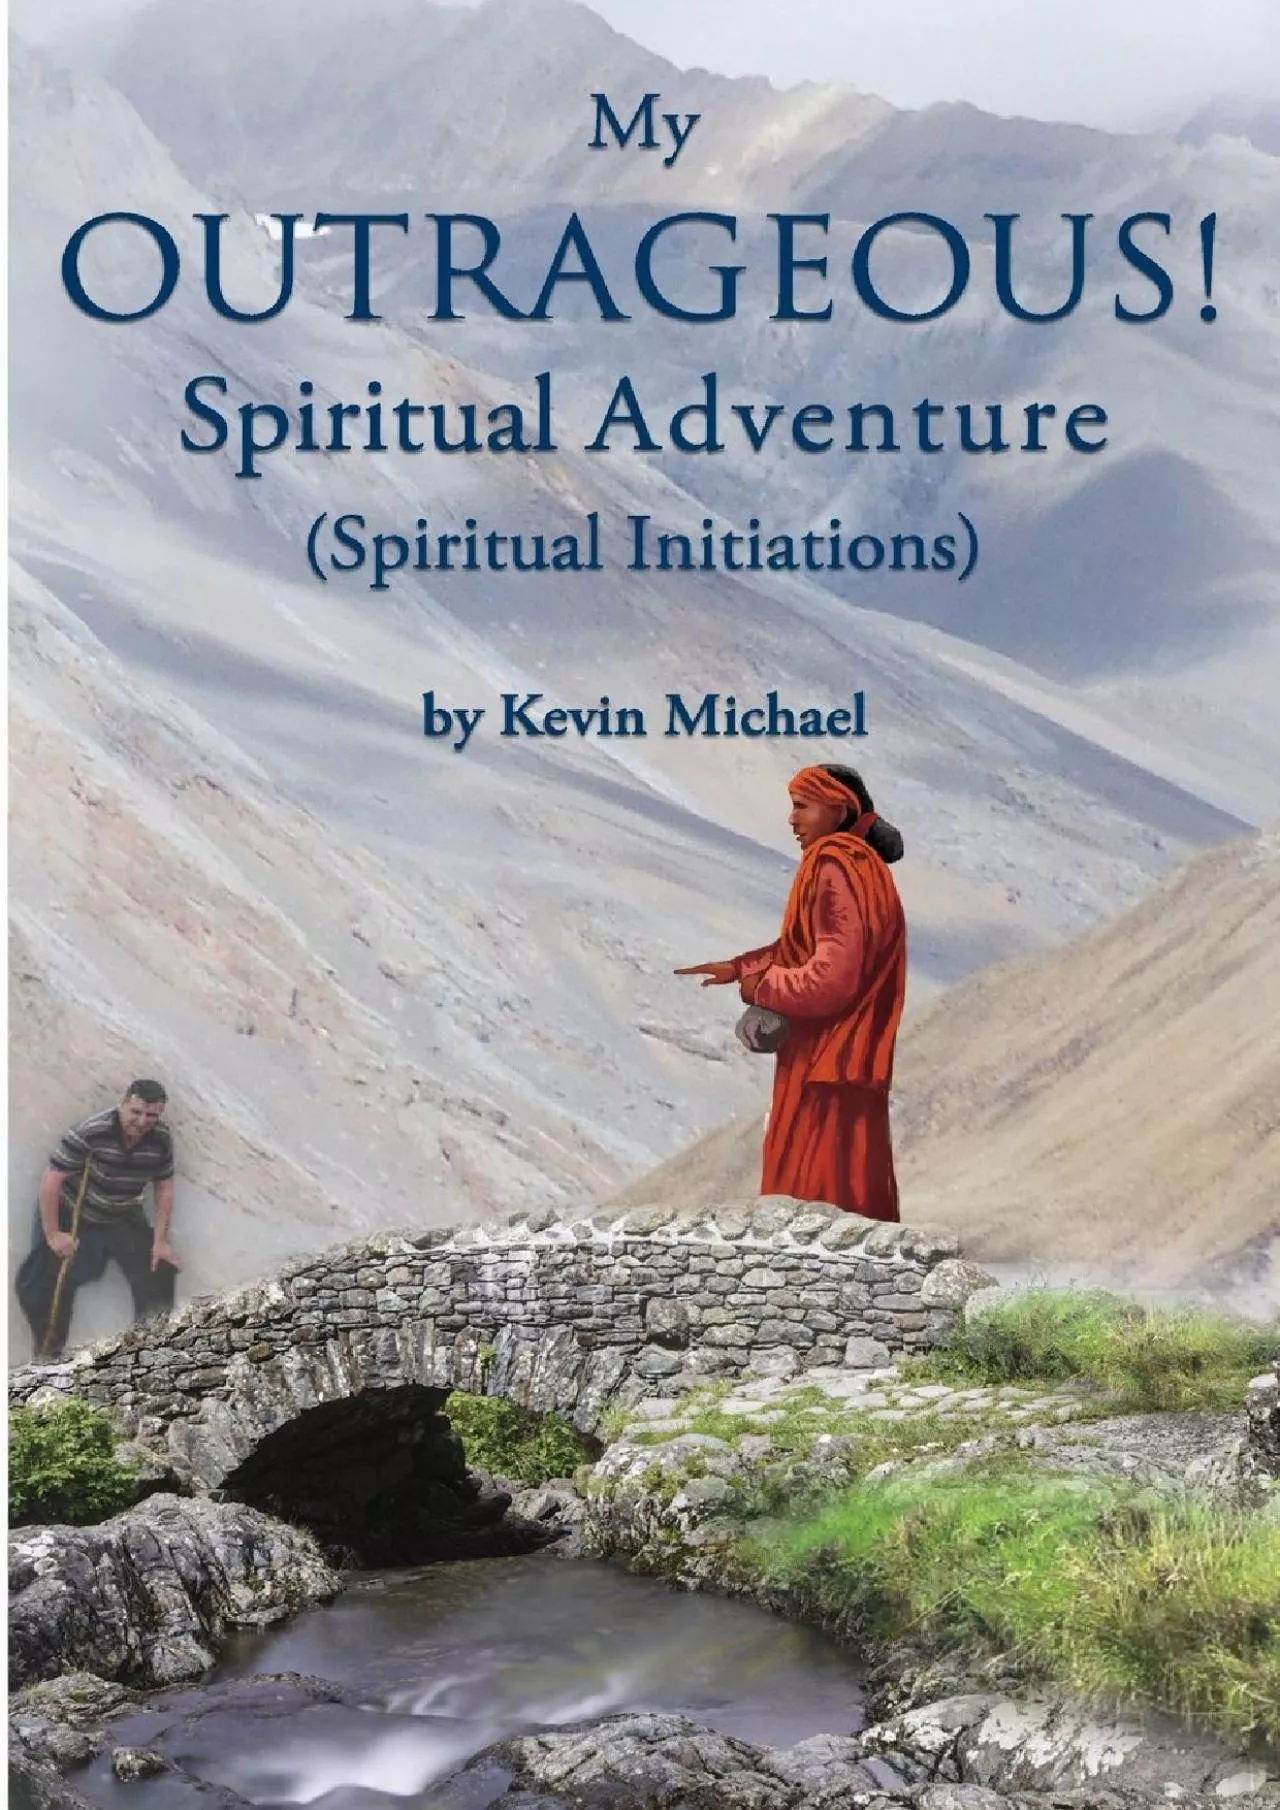 [EBOOK]-My Outrageous! Spiritual Adventure: (Spiritual Initiations)